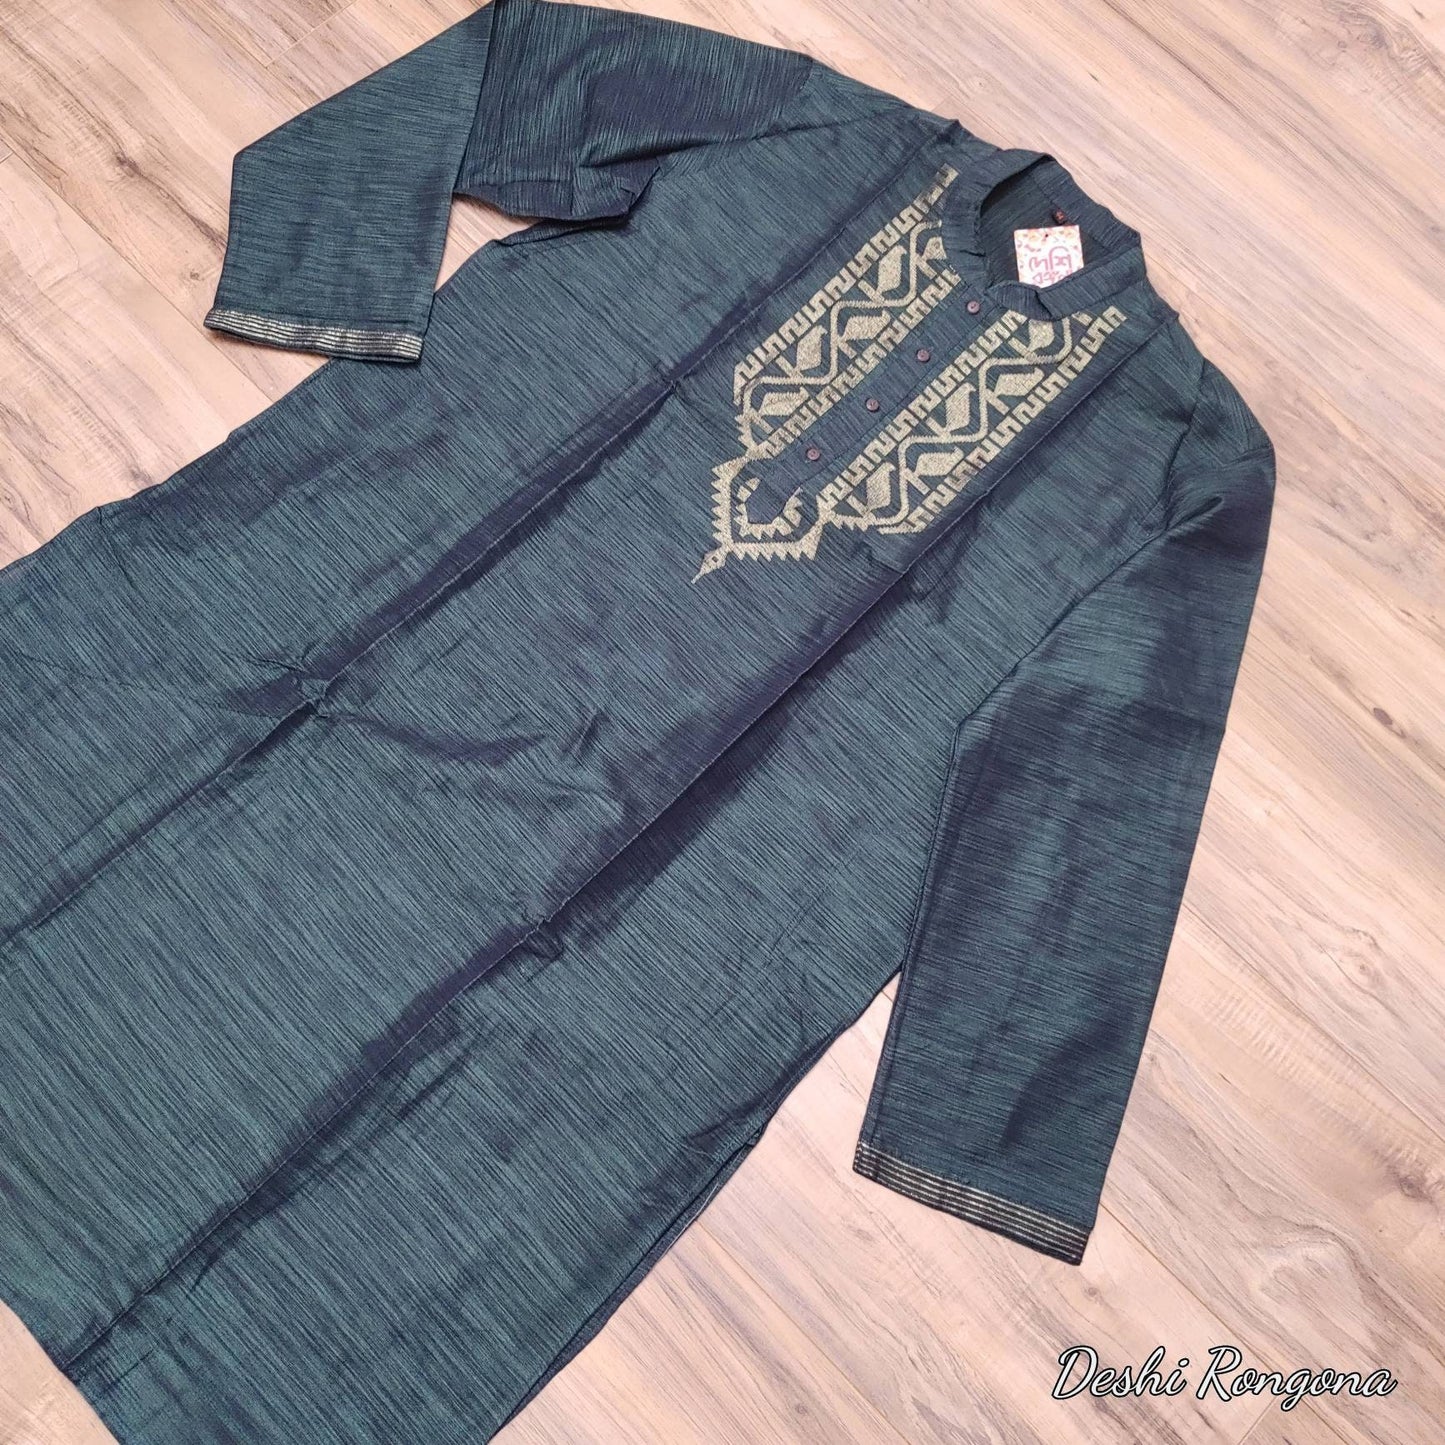 Dhakai Jamdani Tosshor Silk Deep Green Punjabi, Golden Jari work, Loose Fit,Comfortable, Elegant,Classy, Handmade from Scratch in Bangladesh